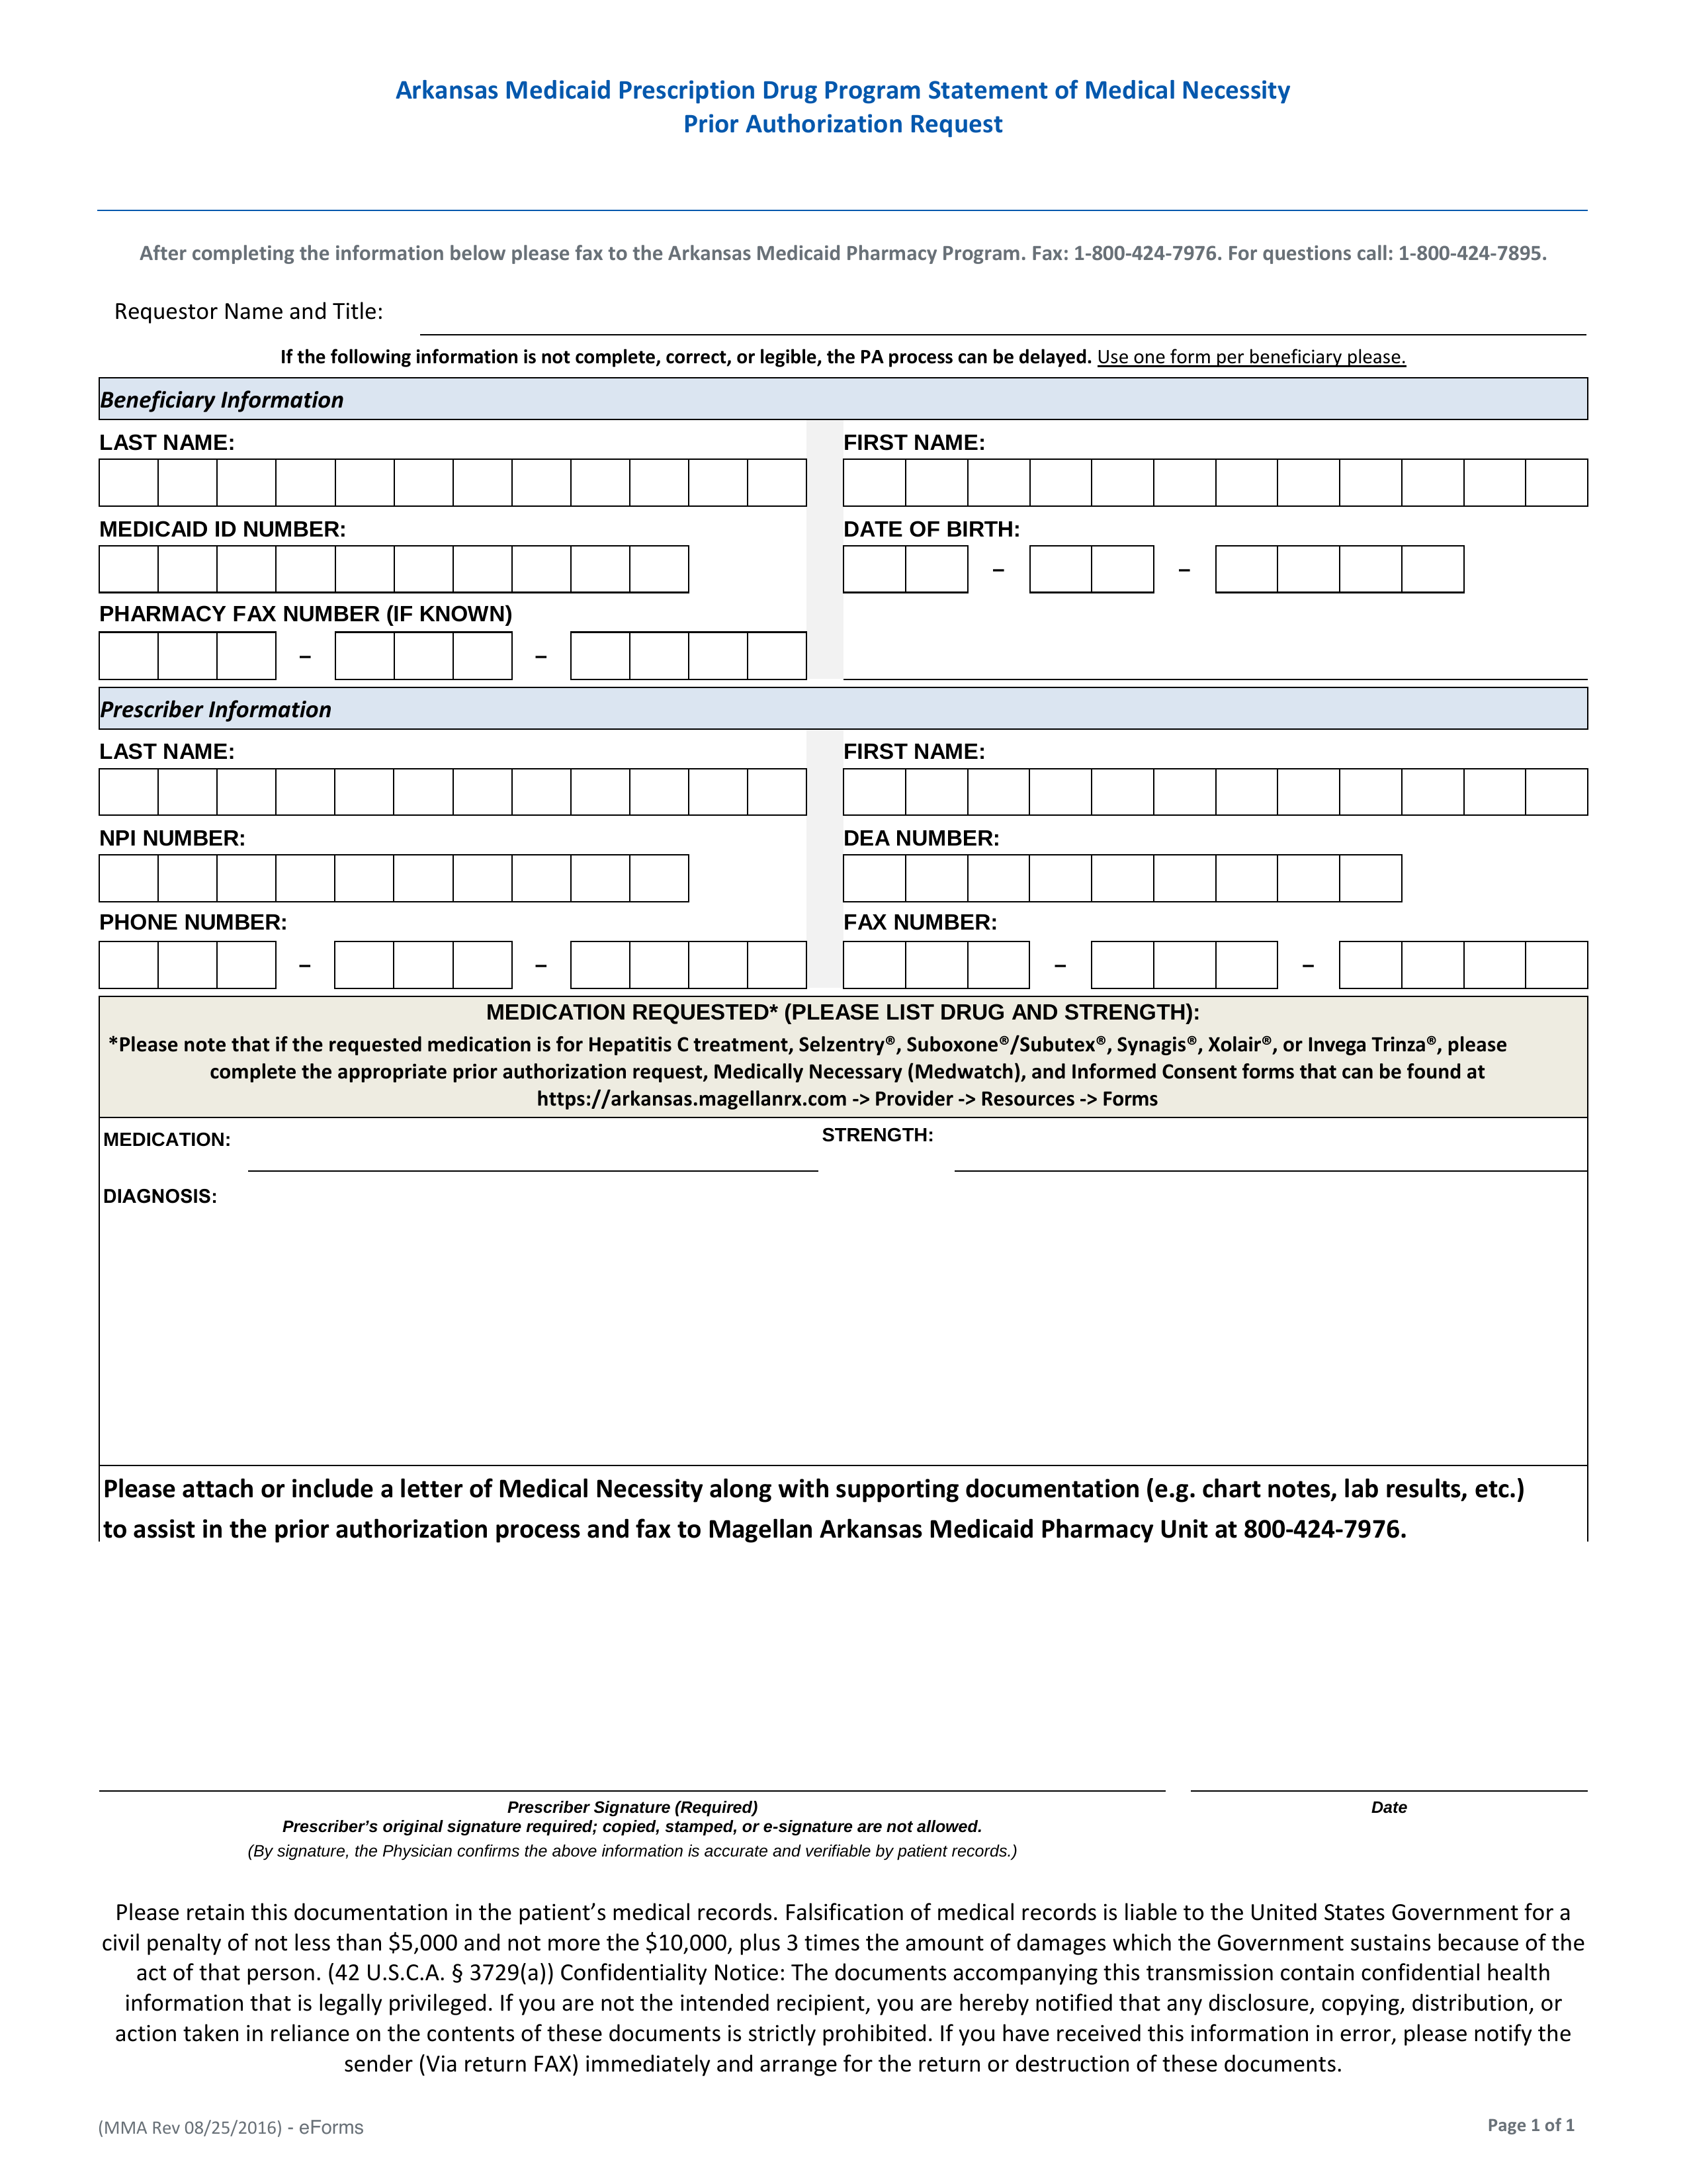 Arkansas Medicaid Prior (Rx) Authorization Form